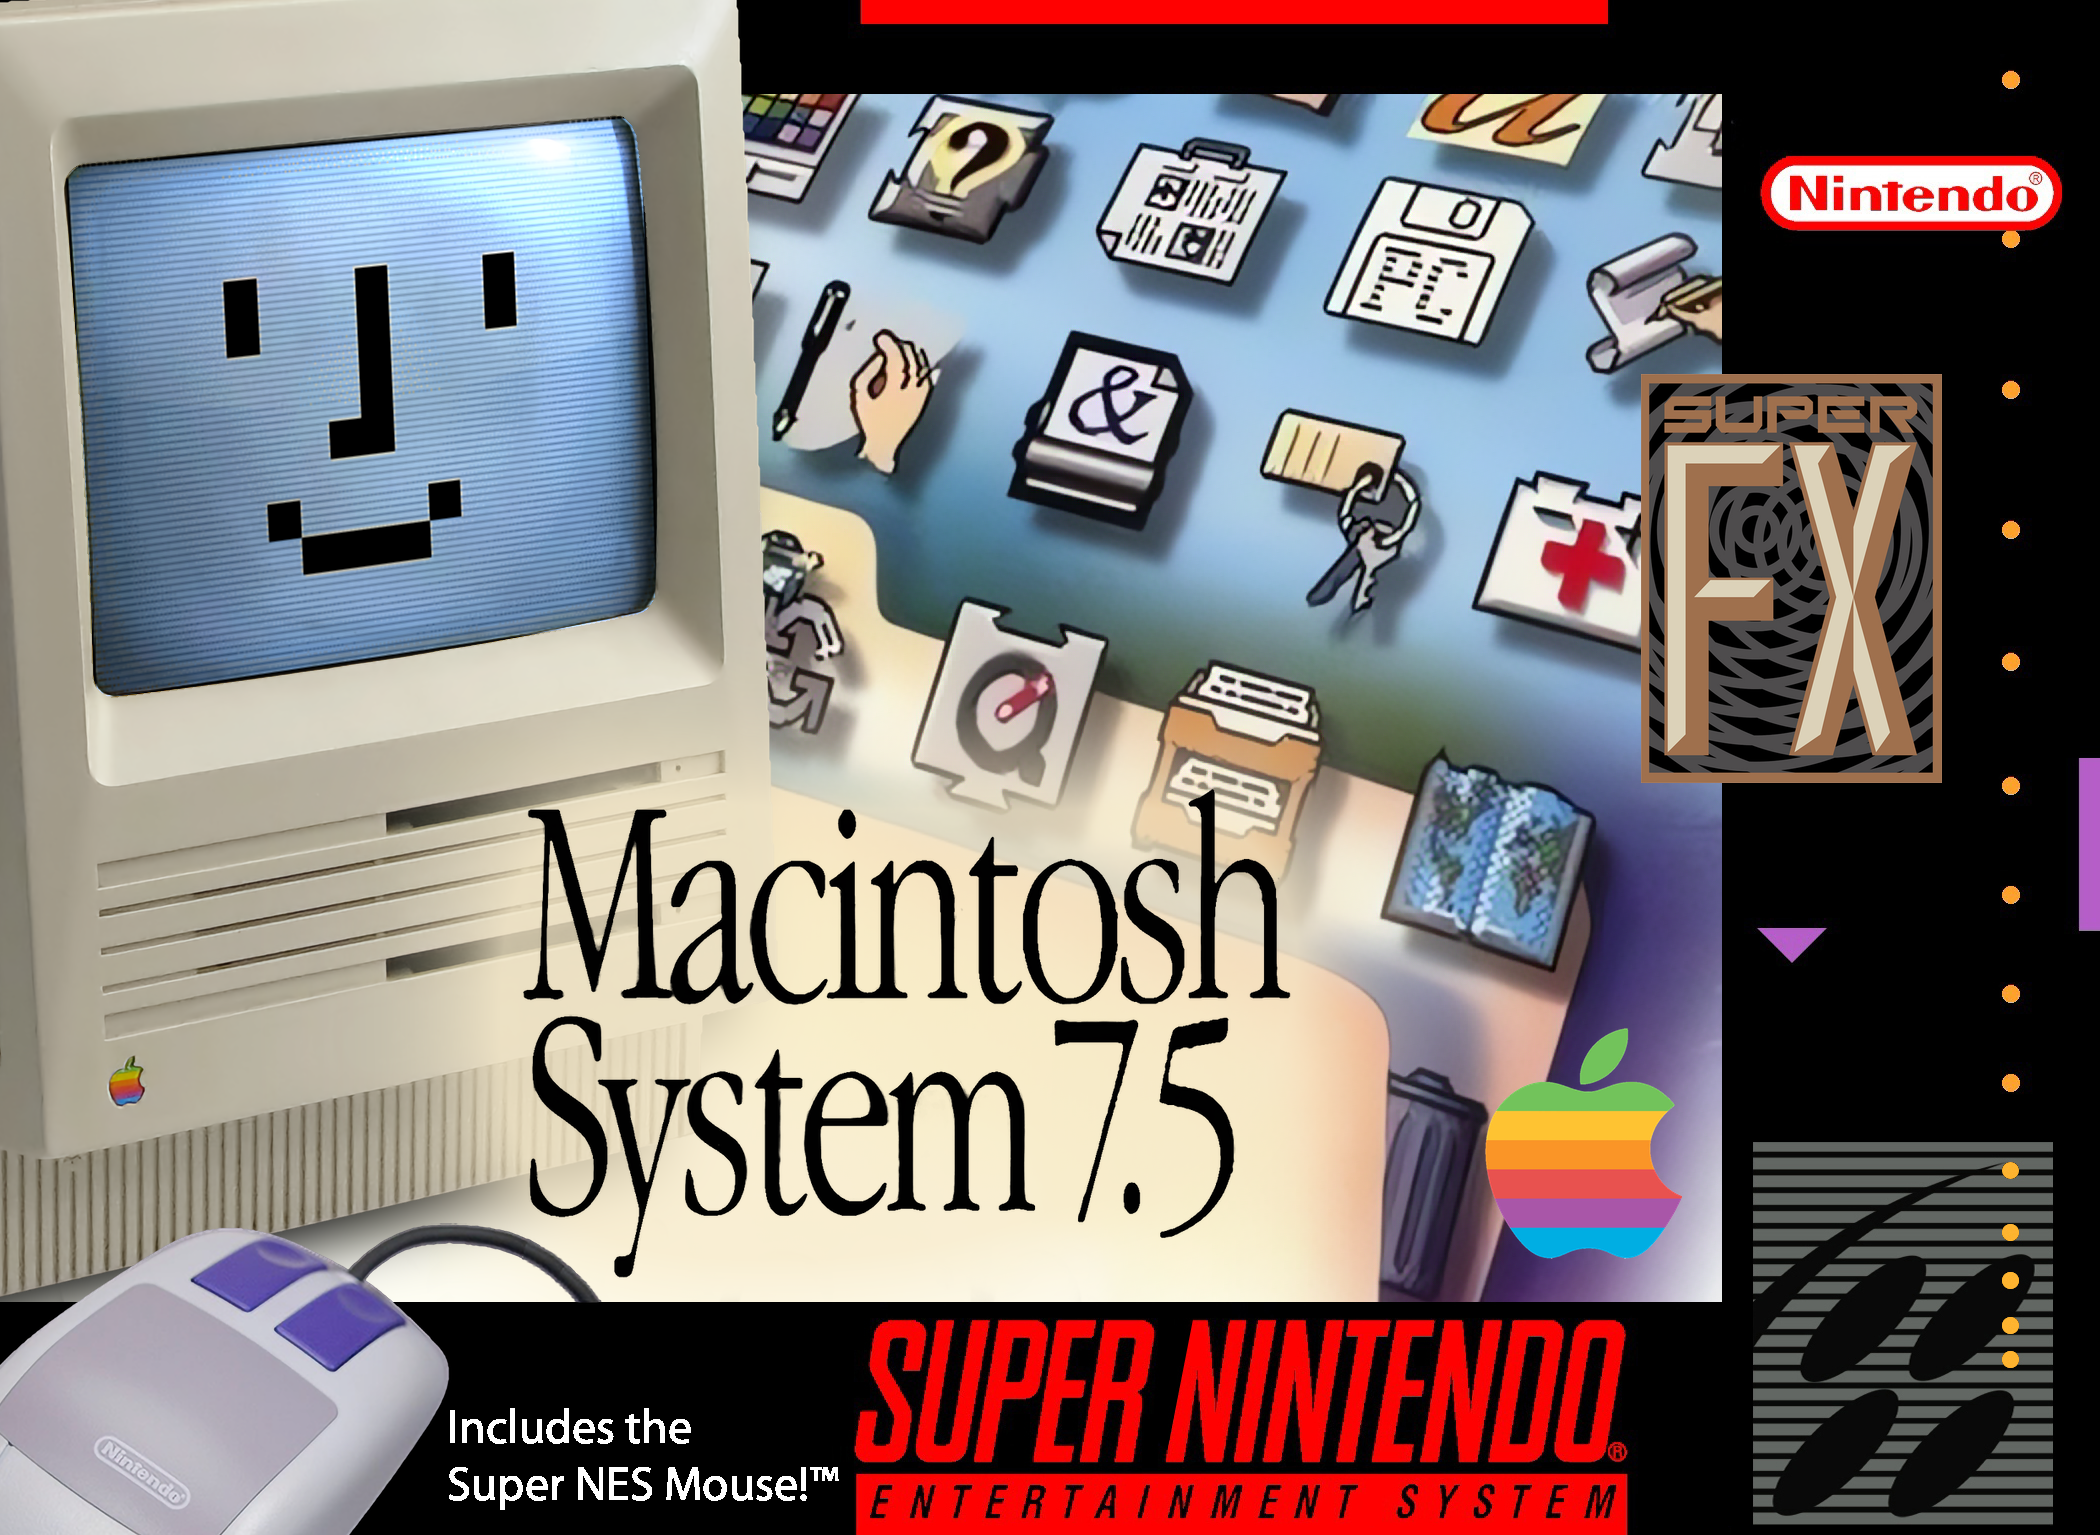 Macintosh System 7 for the Nintendo Entertainment System